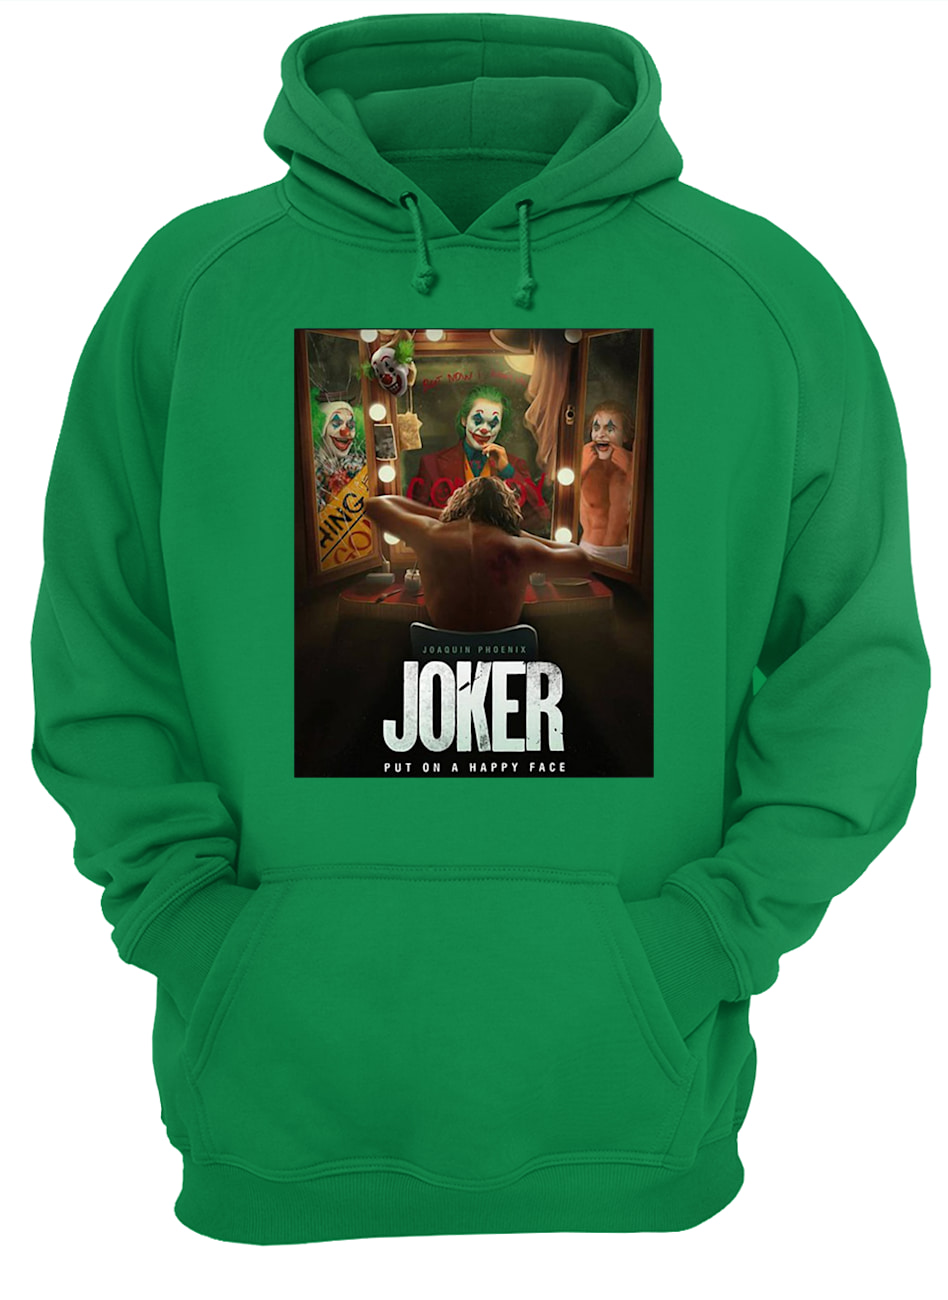 Joker put on a happy face hoodie